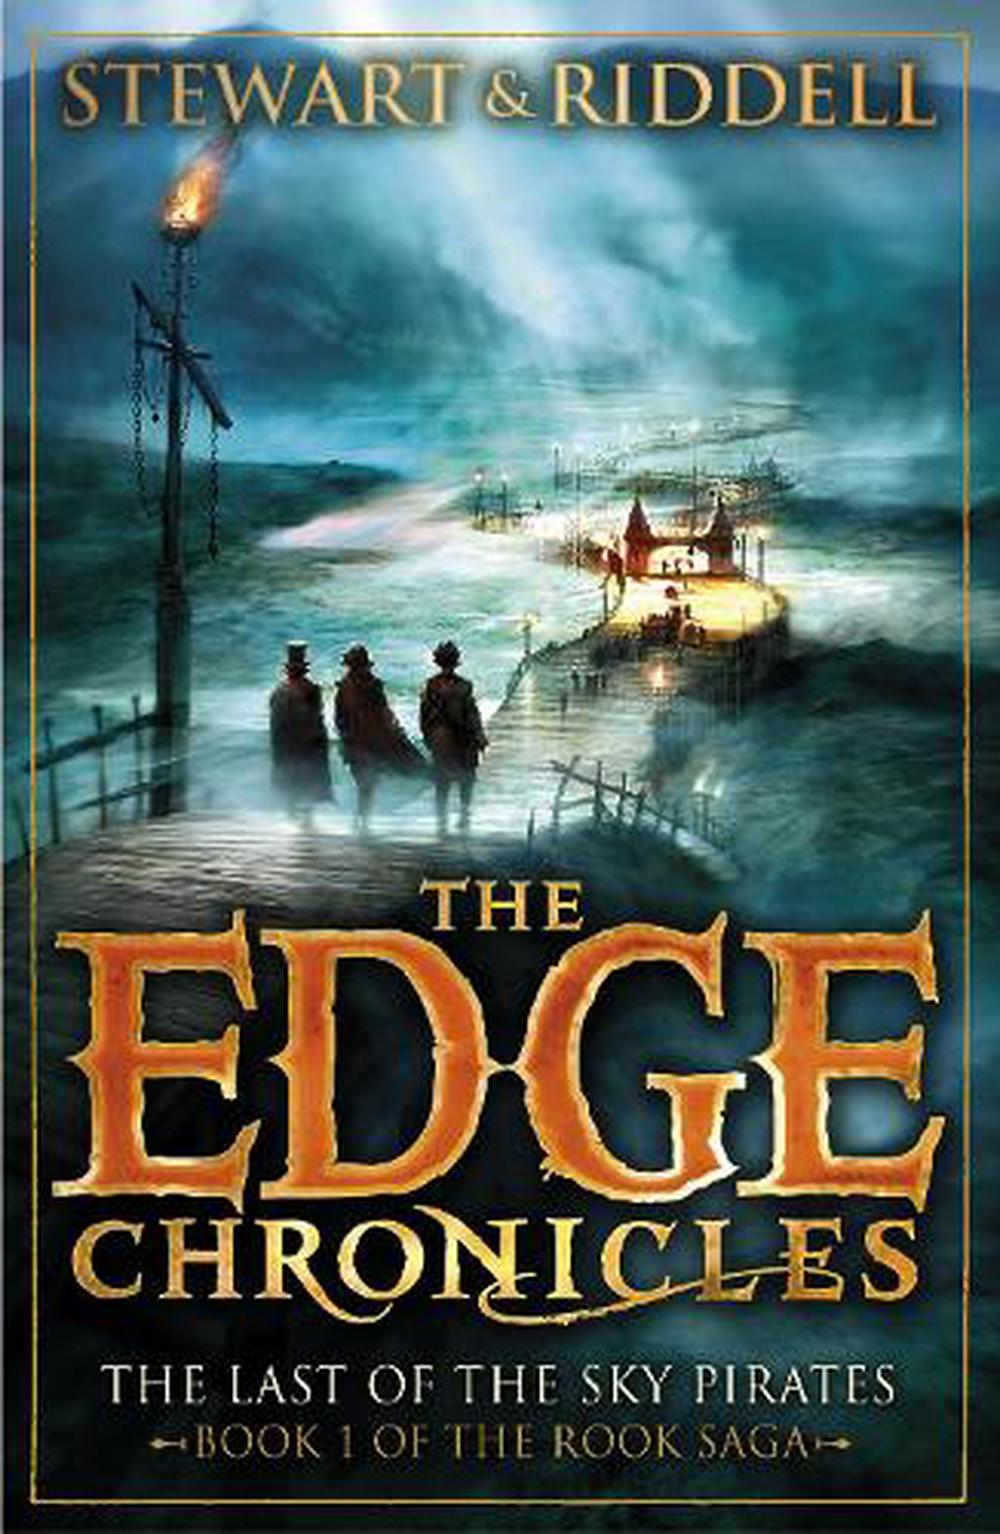 The Edge Chronicles 7 by Paul Stewart